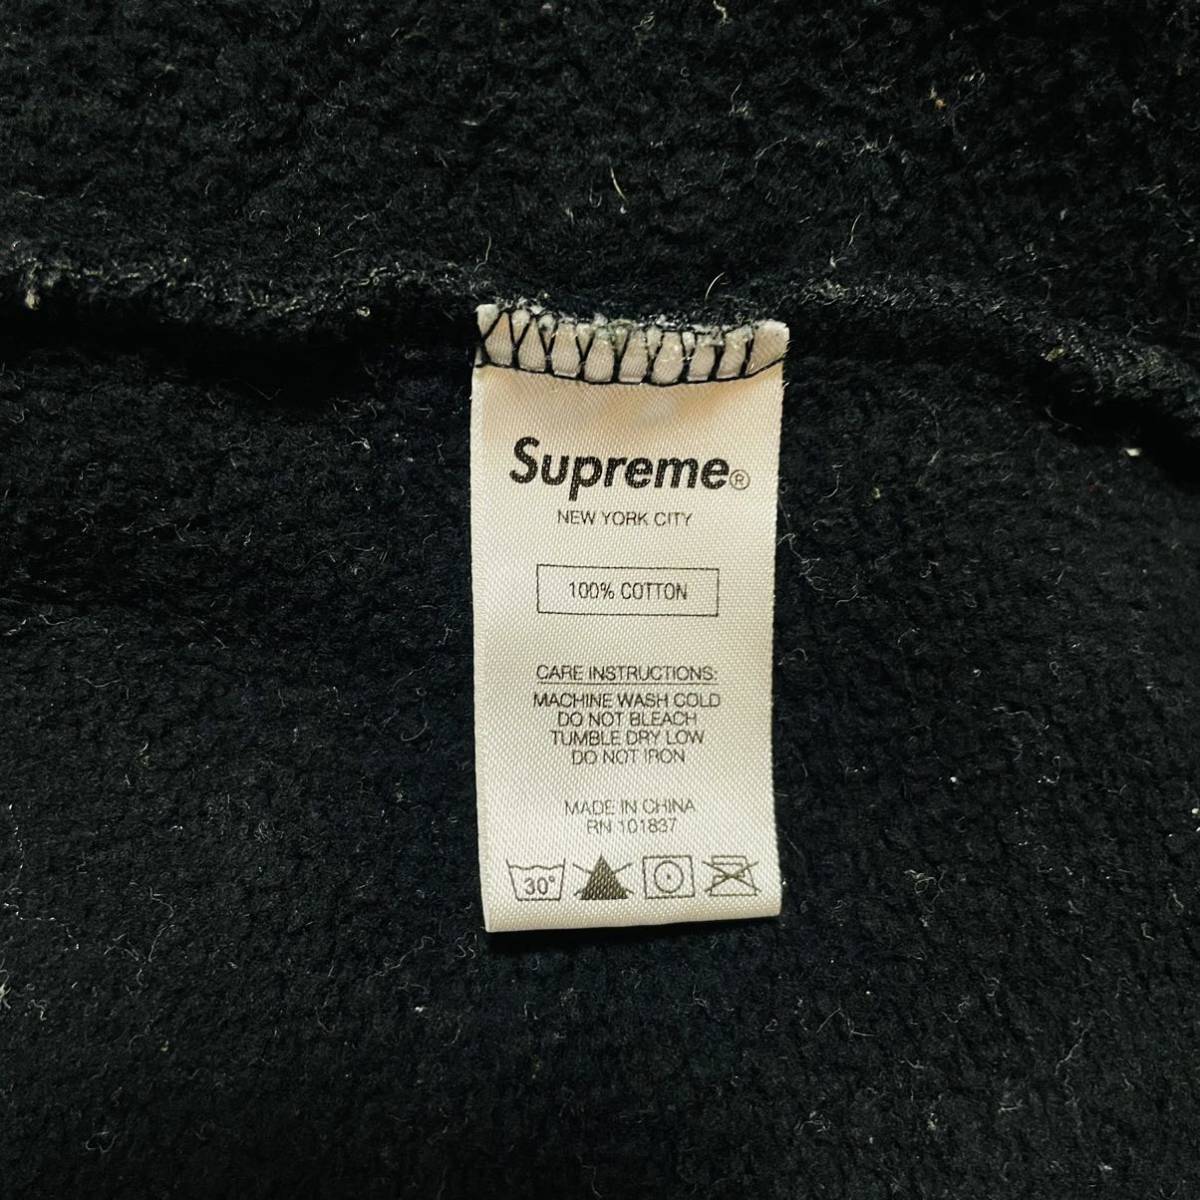 Supreme Sideline Hooded Sweatshirt Black White L 18ss 2018年 黒 ブラック ホワイト サイドライン サイドロゴ スウェット ボックスロゴ_画像7